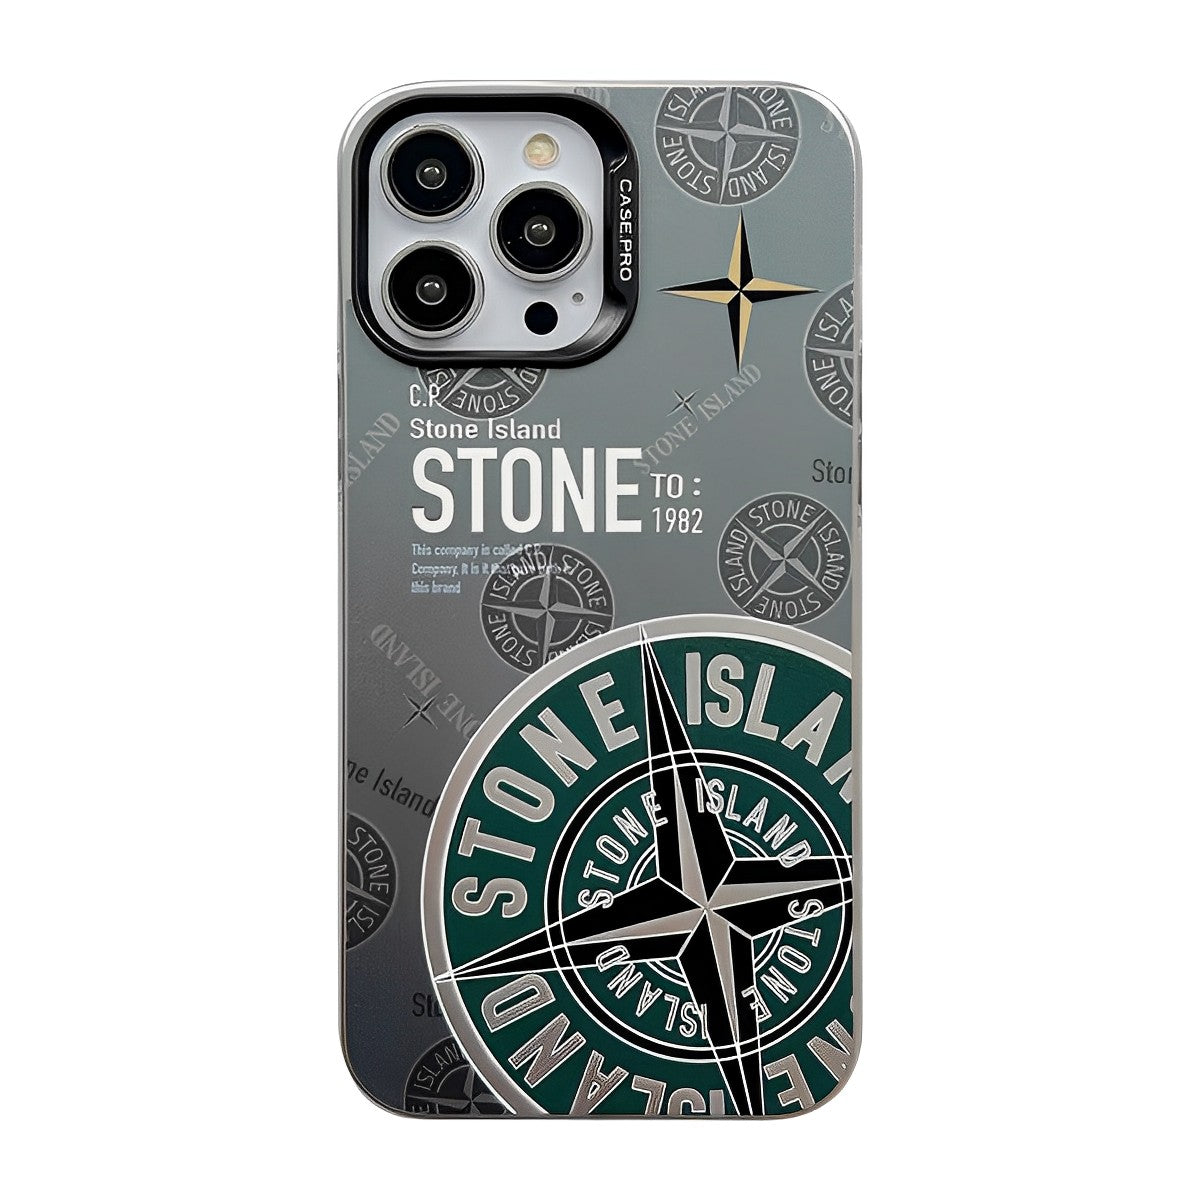 Stone iPhone Case